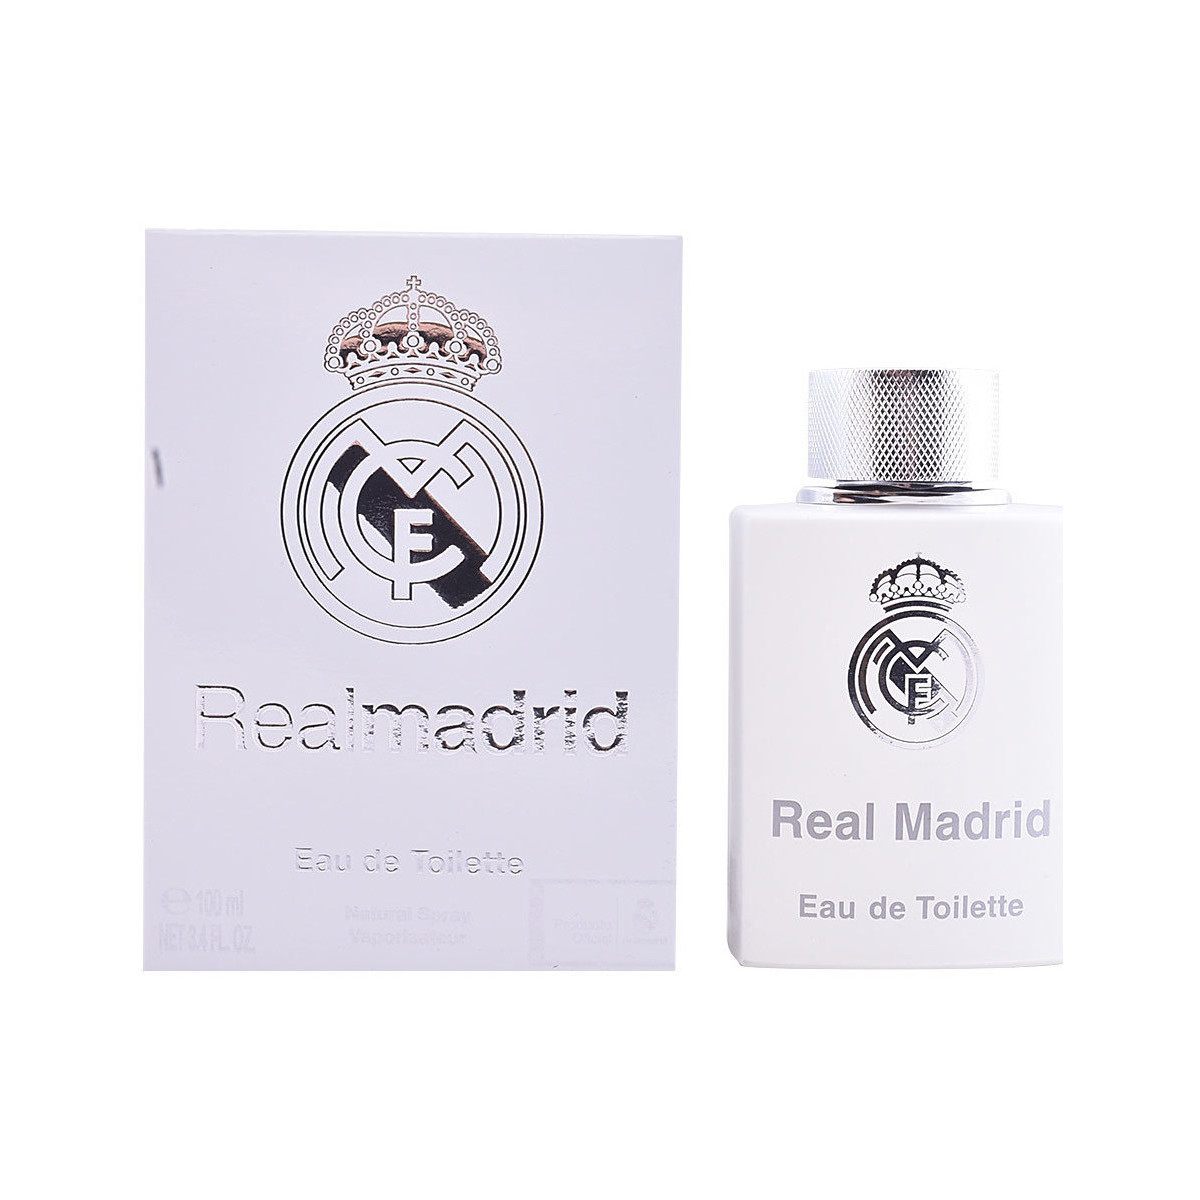 Beauty Herren Kölnisch Wasser Sporting Brands Real Madrid Eau De Toilette Spray 